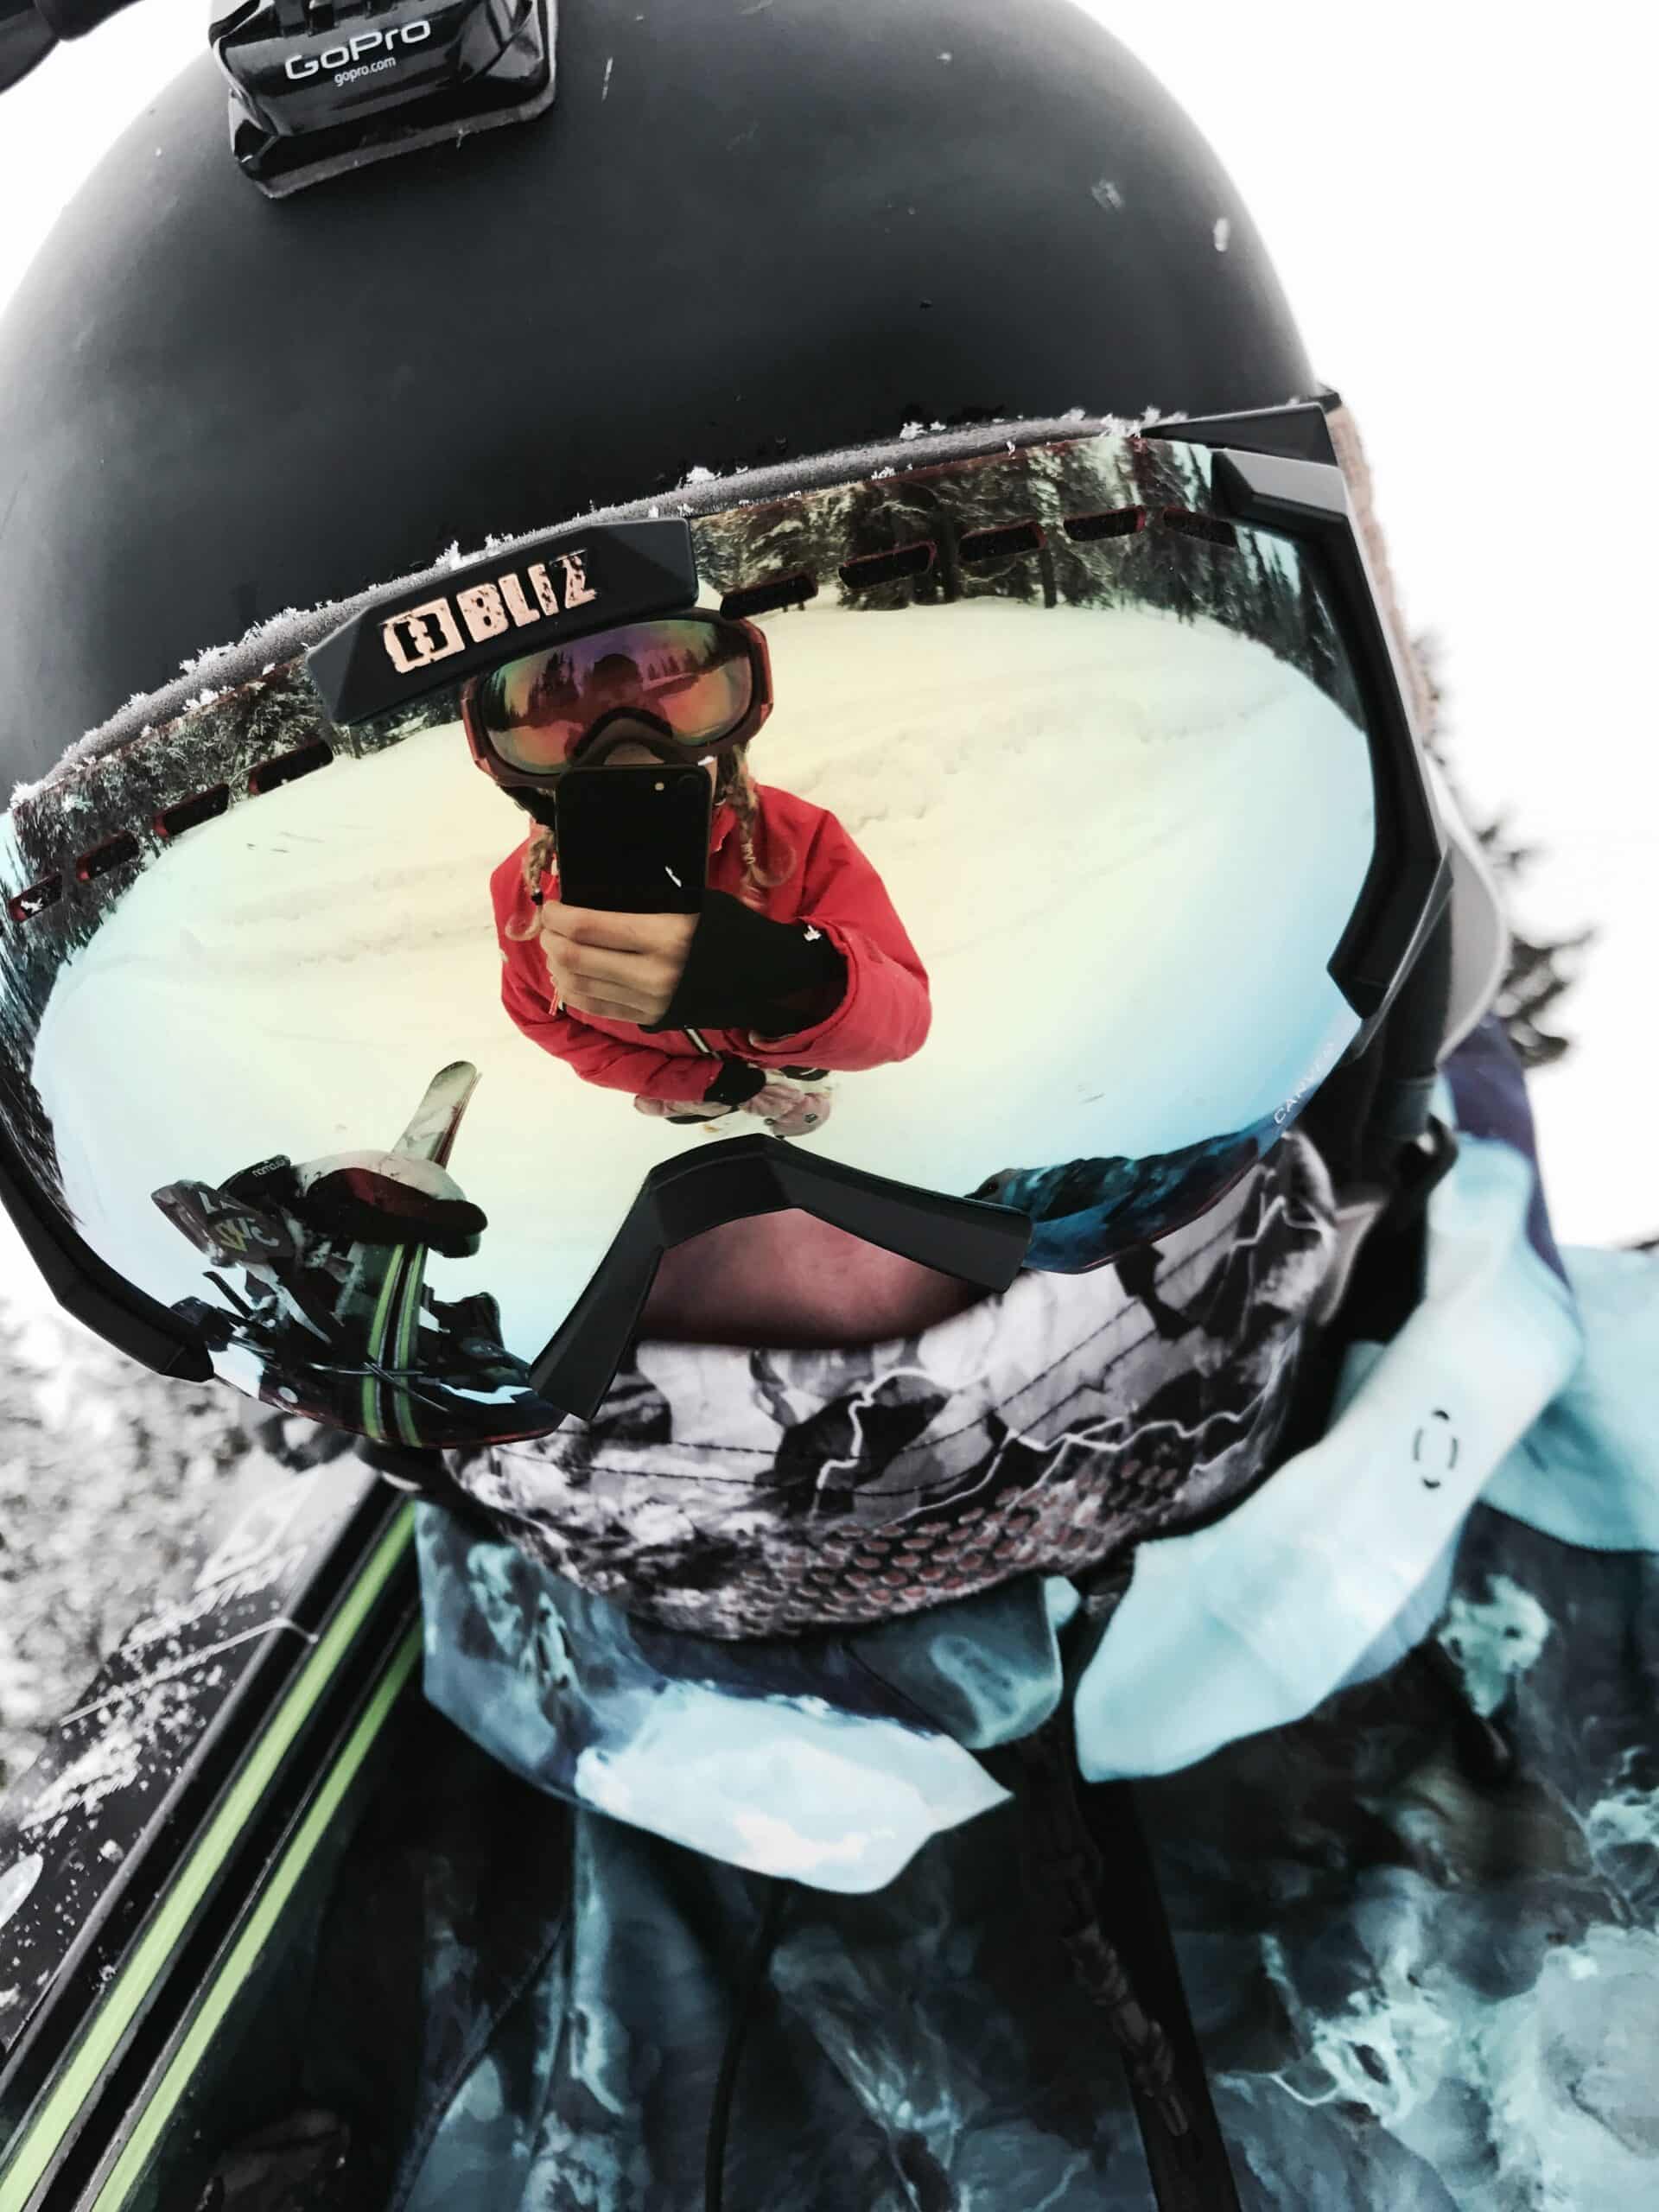 skiier in balaclava or ski mask